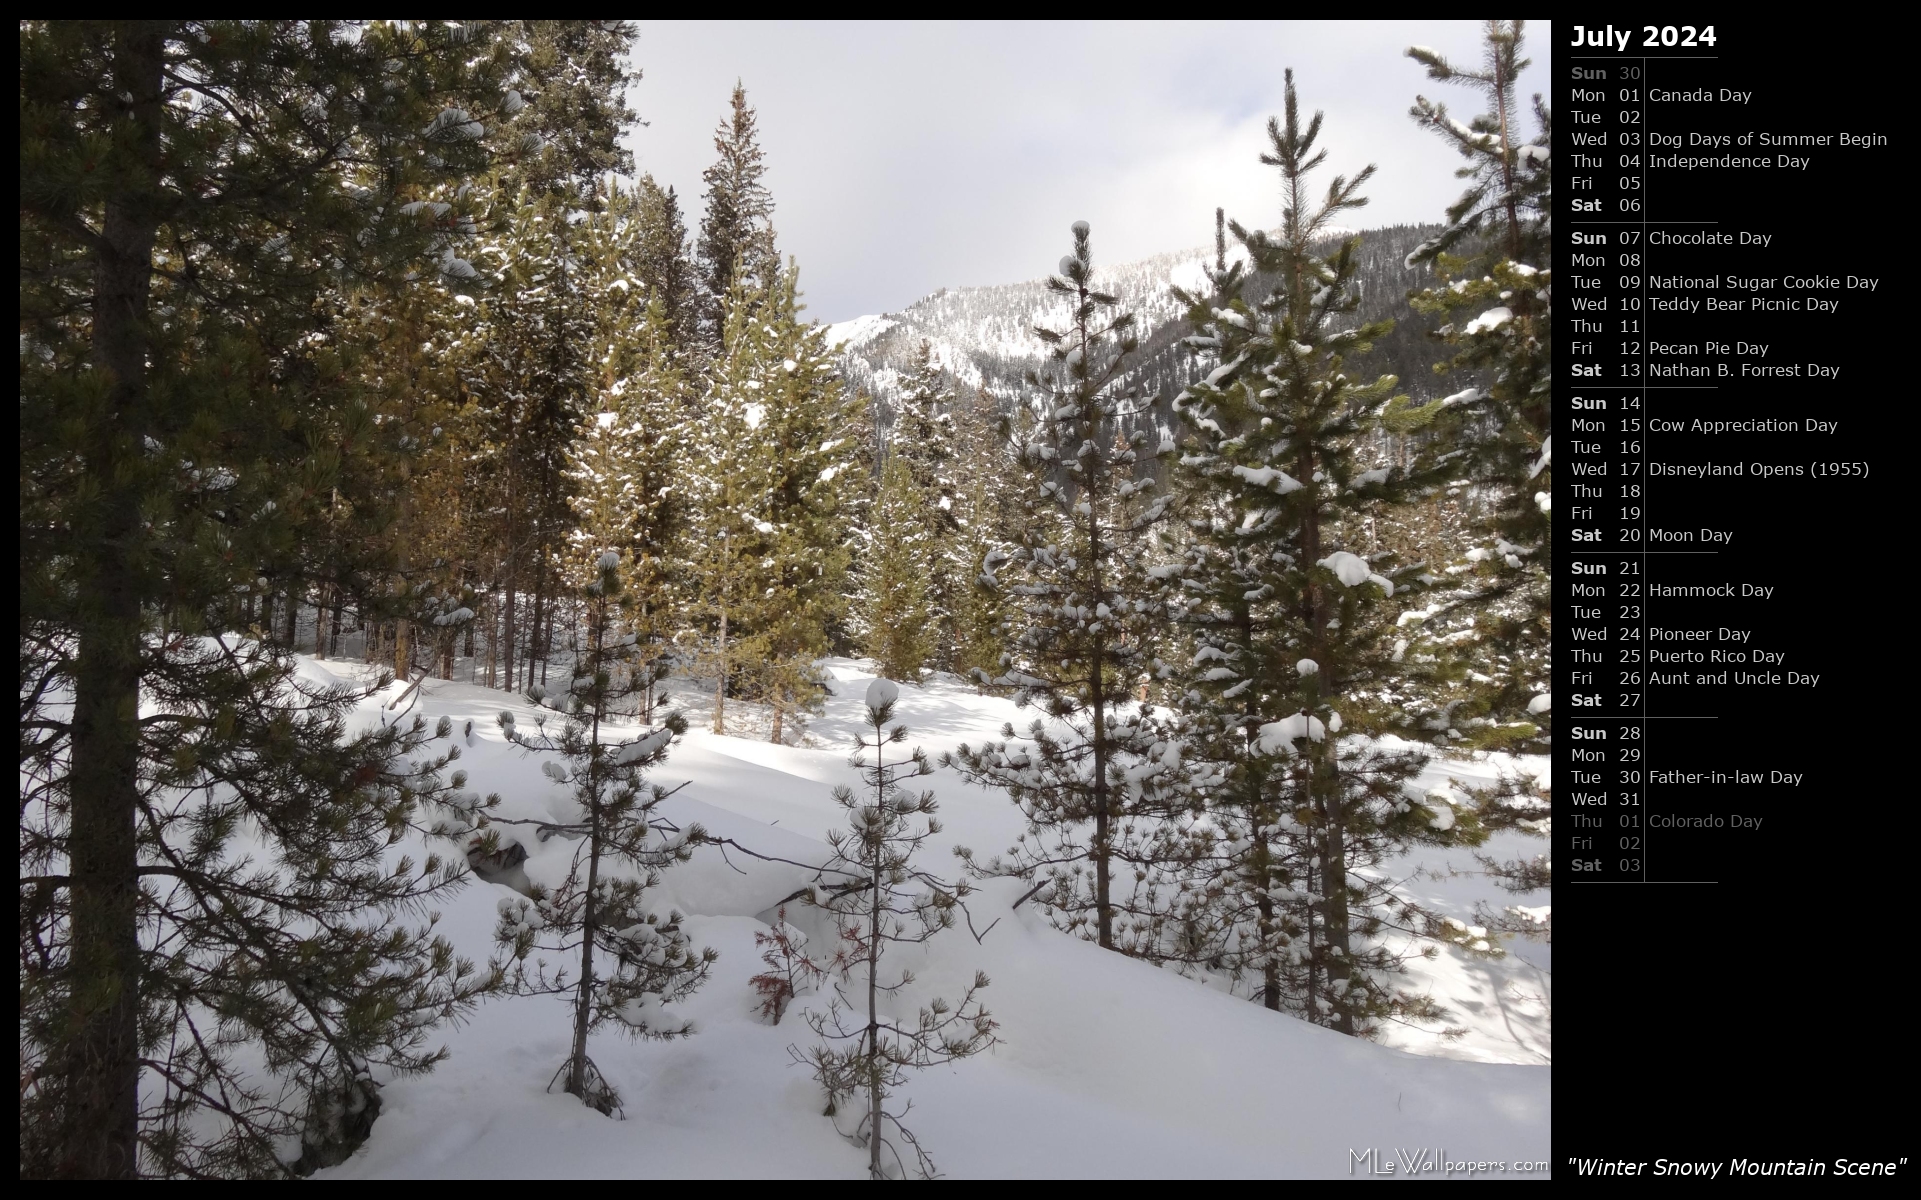 MLeWallpapers.com - Winter Snowy Mountain Scene (Calendar)